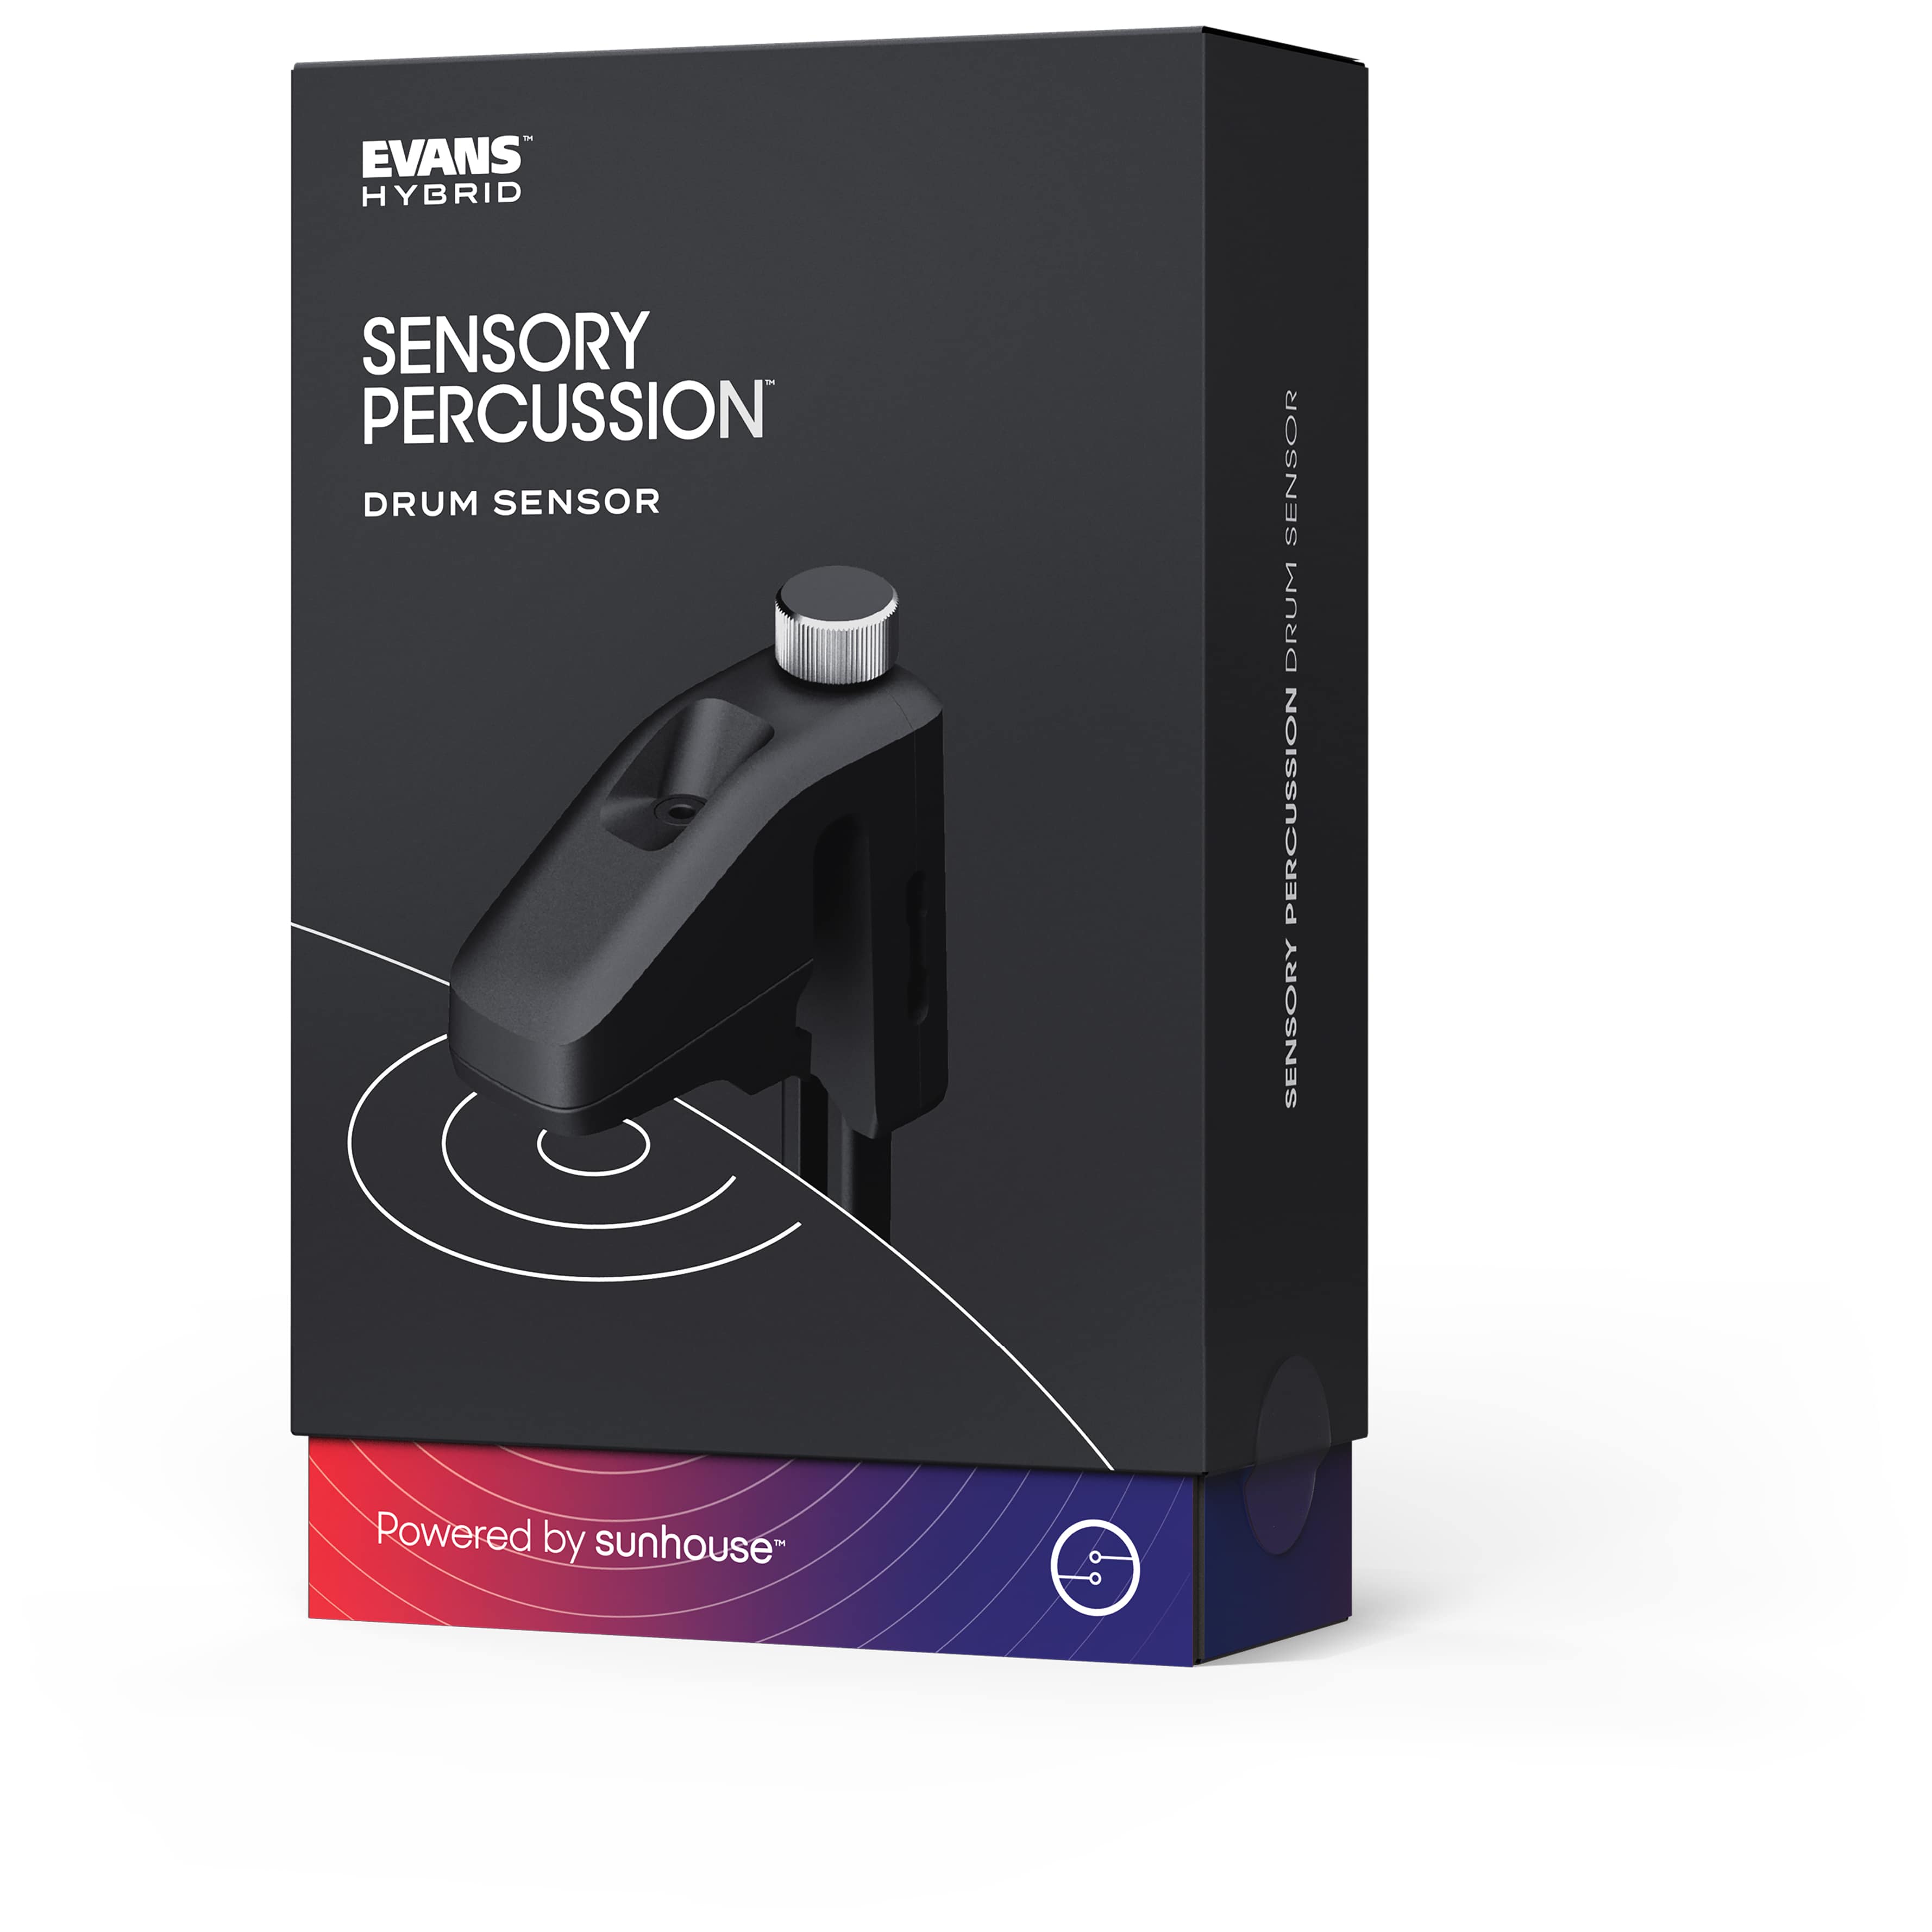 Evans Hybrid Sensory Percussion Sound System - Sensor Ad don